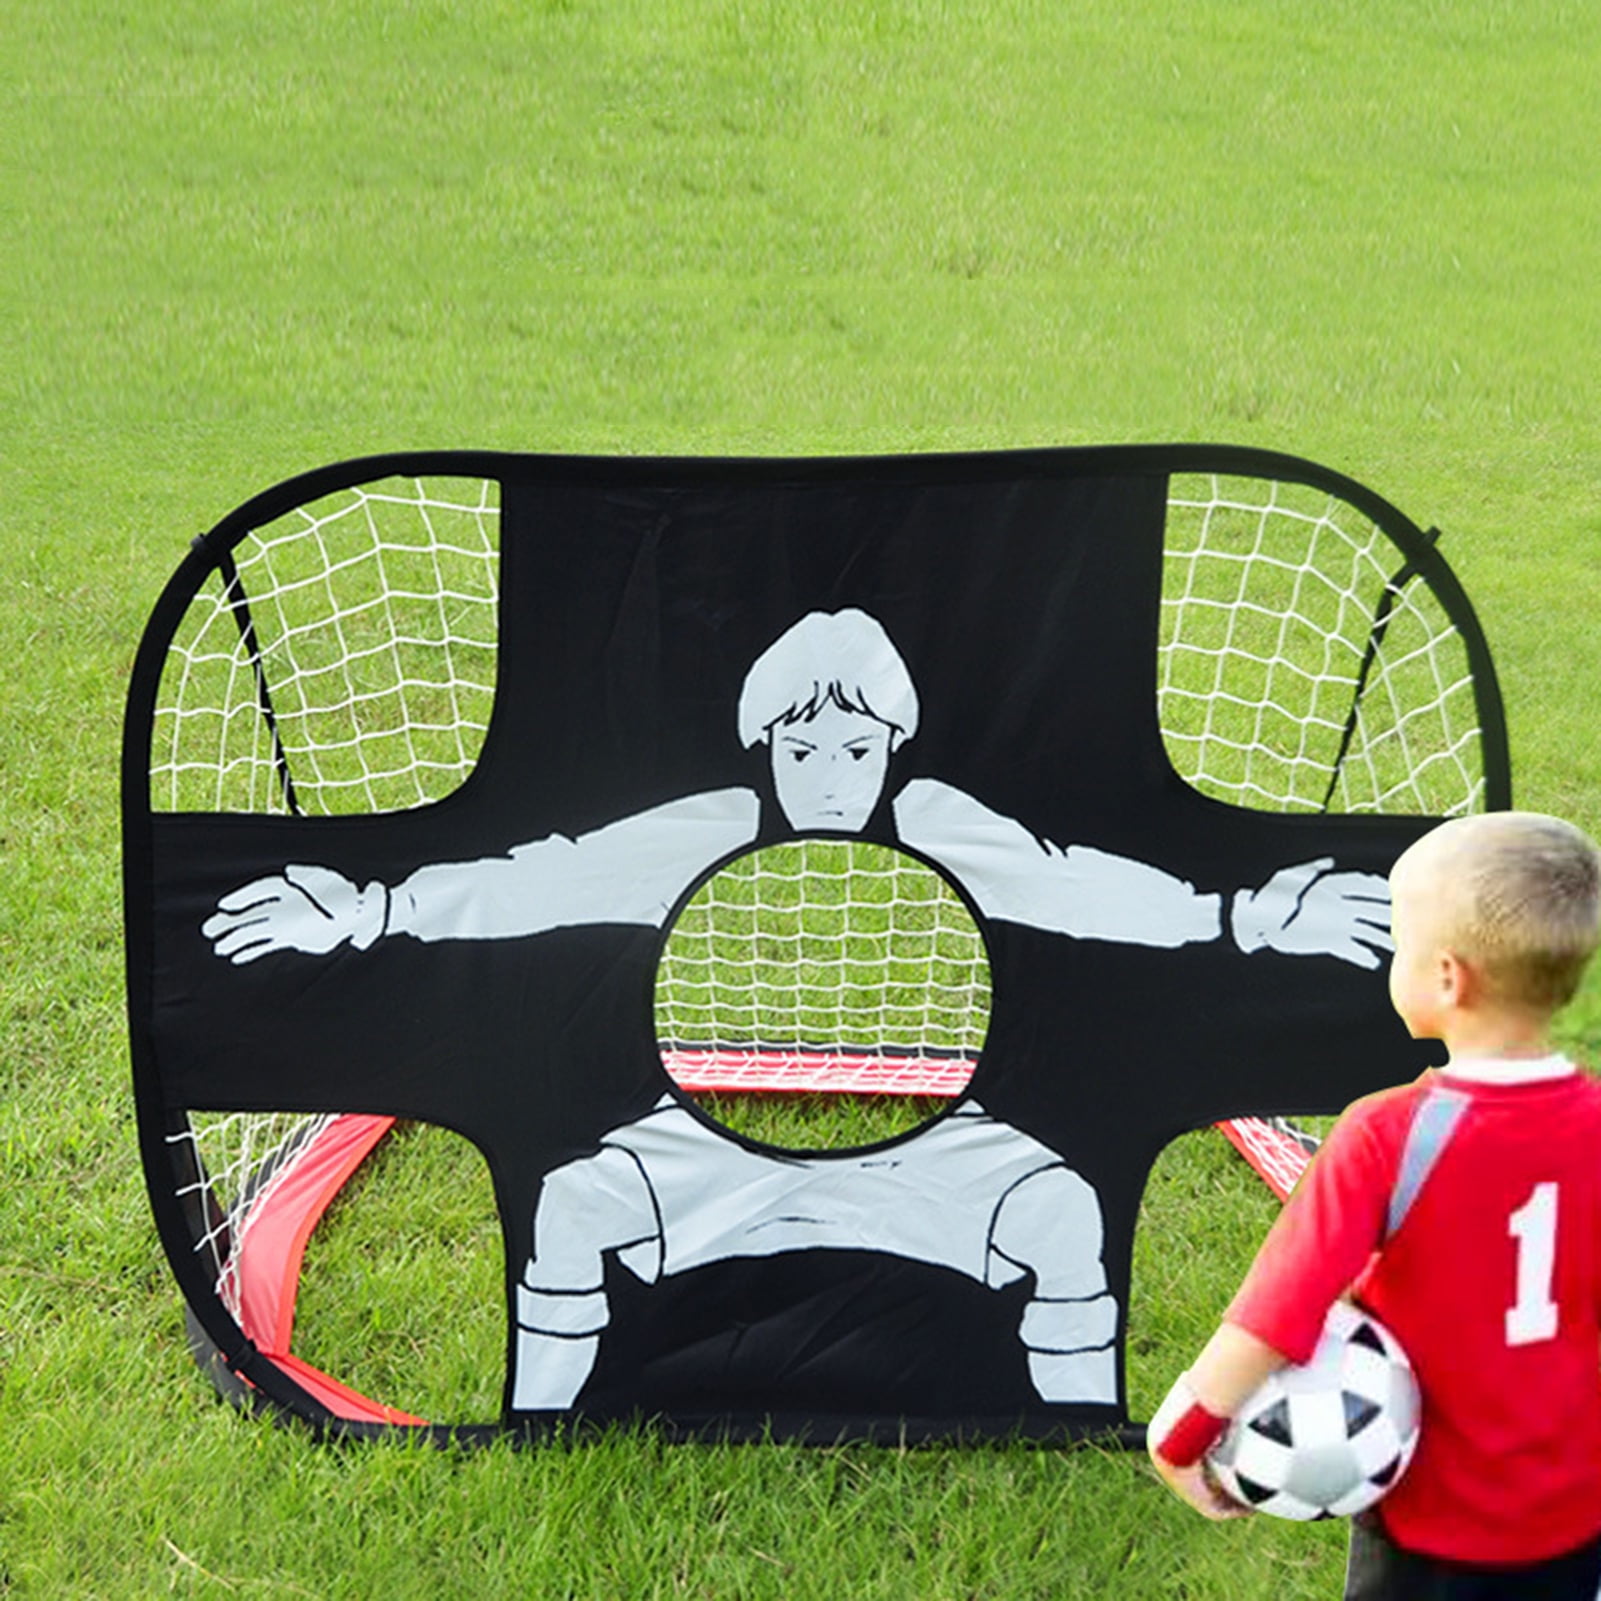 Portable Football Gate Soccer Goal Pop Up Kid Outdoor Play Training Net Fun Game 